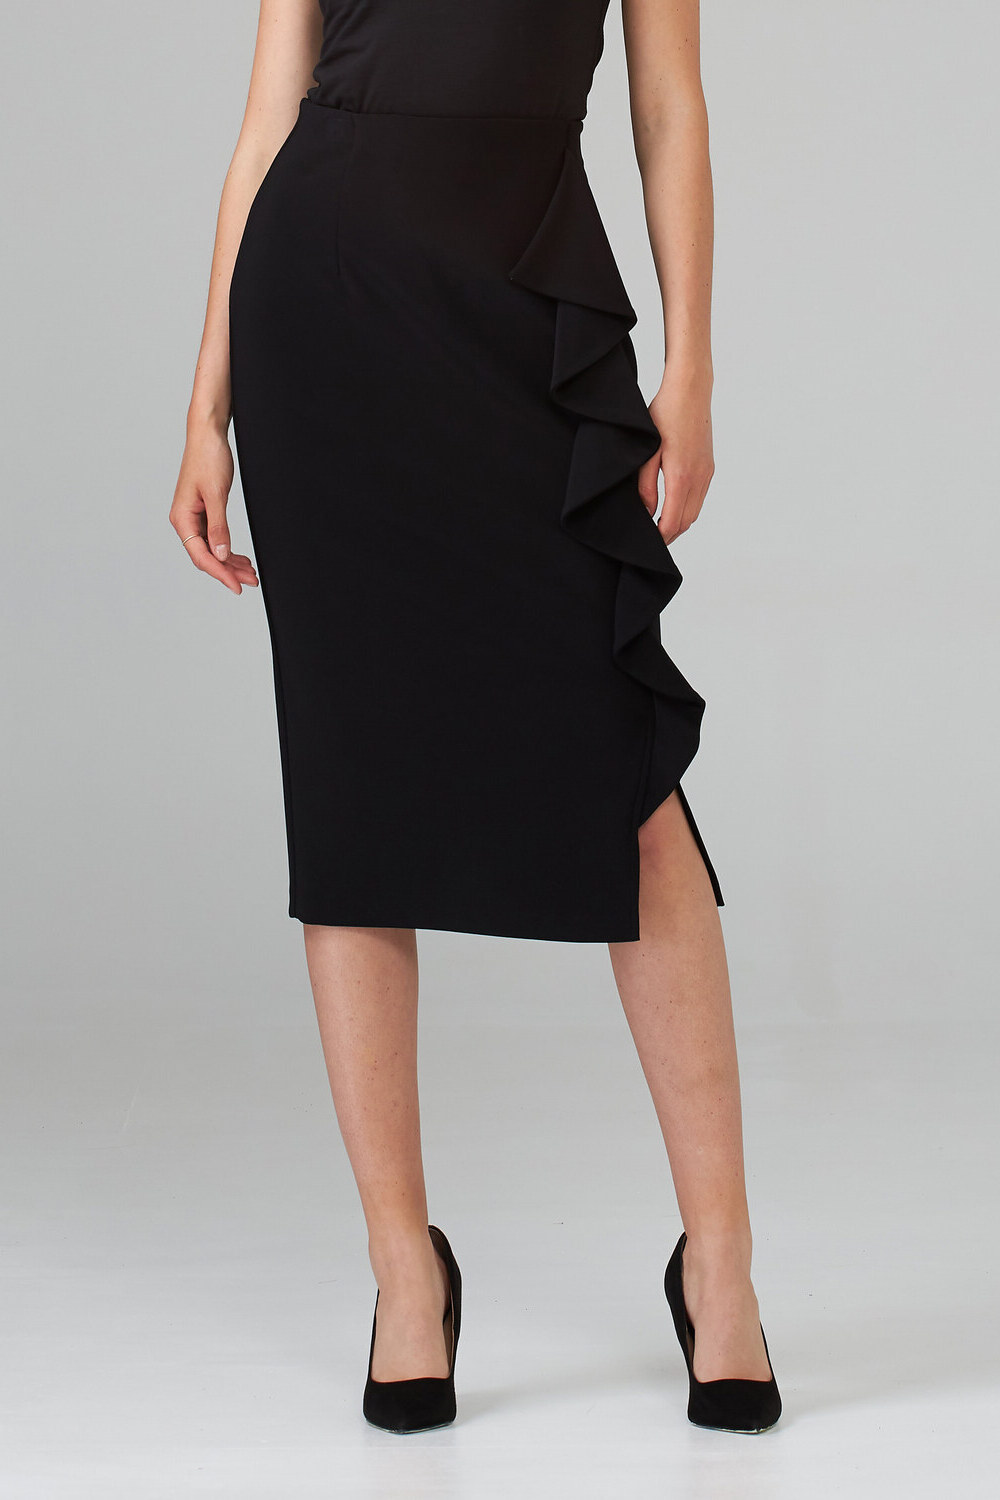 Joseph Ribkoff Skirt Style 203358. Black